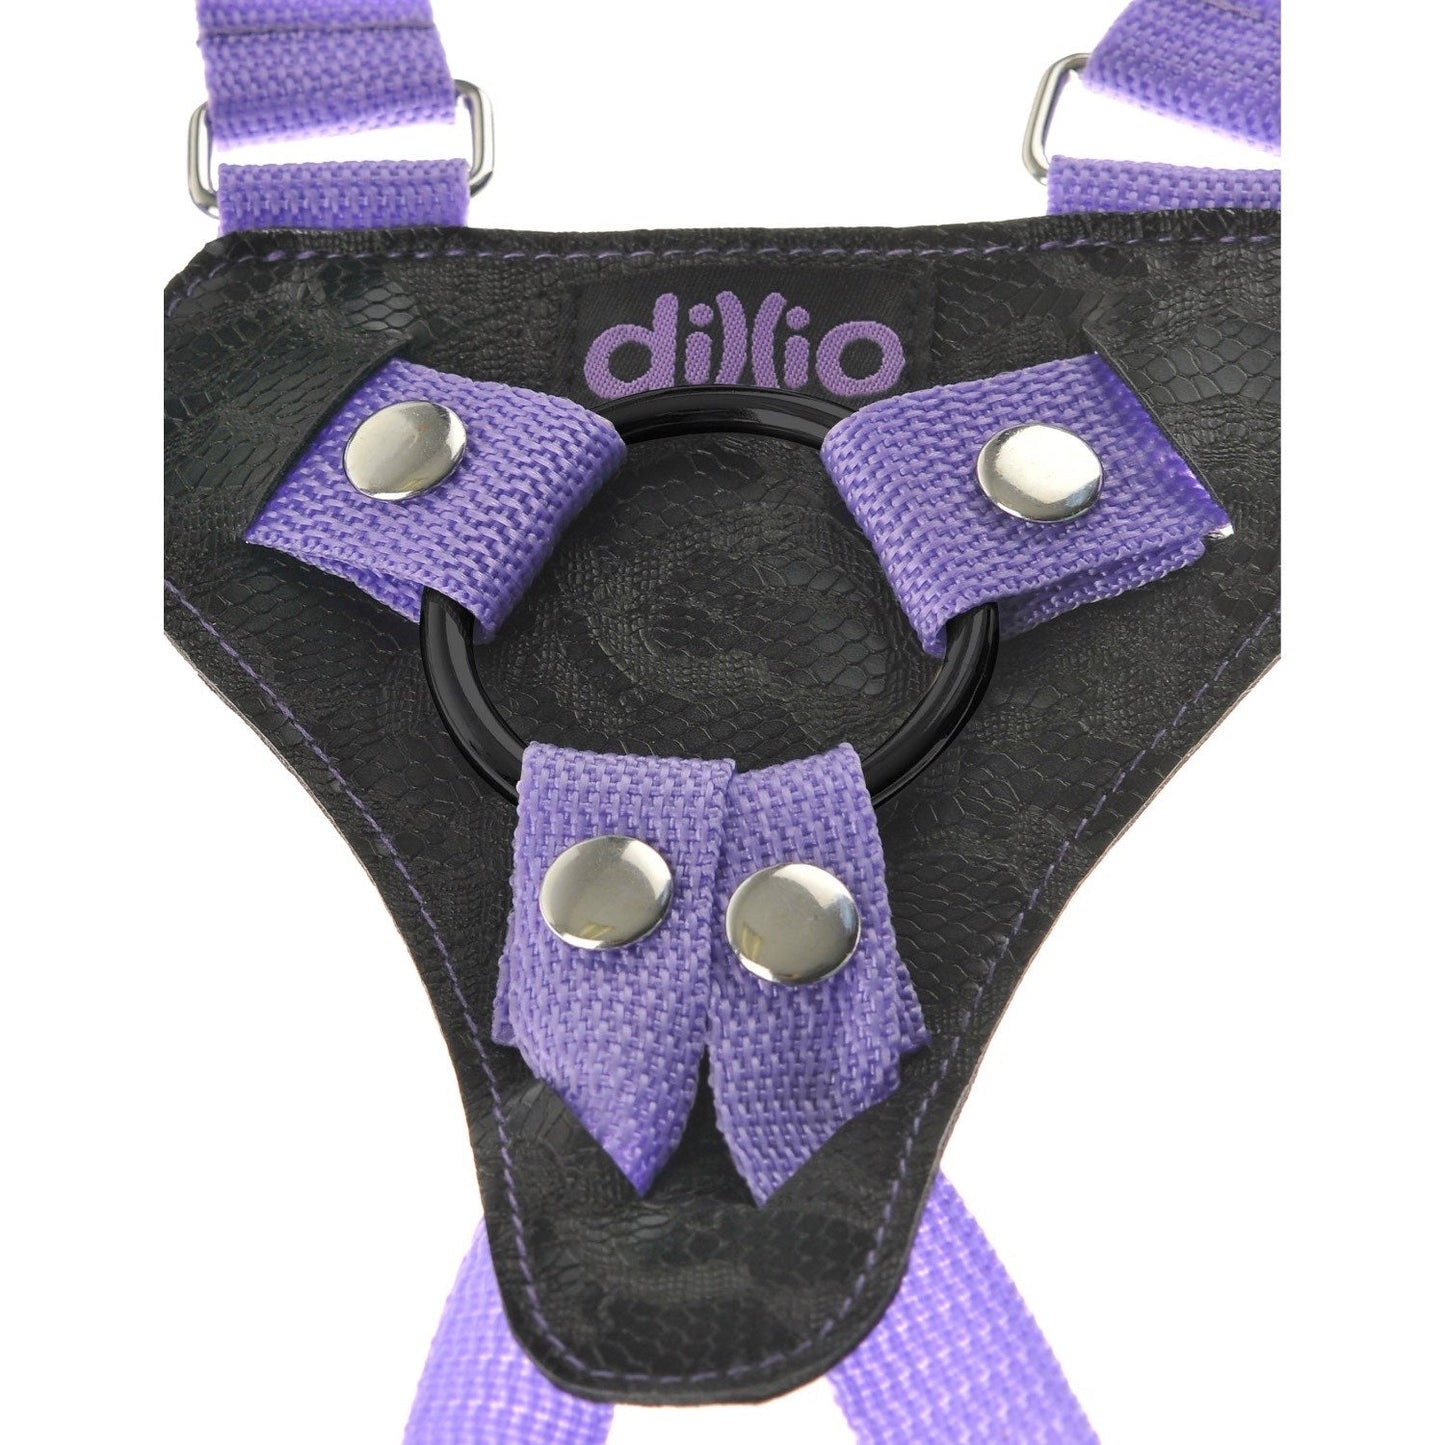 7" Strap-On Suspender Harness Set - Purple 17.8 cm Strap-On with Suspender Harness